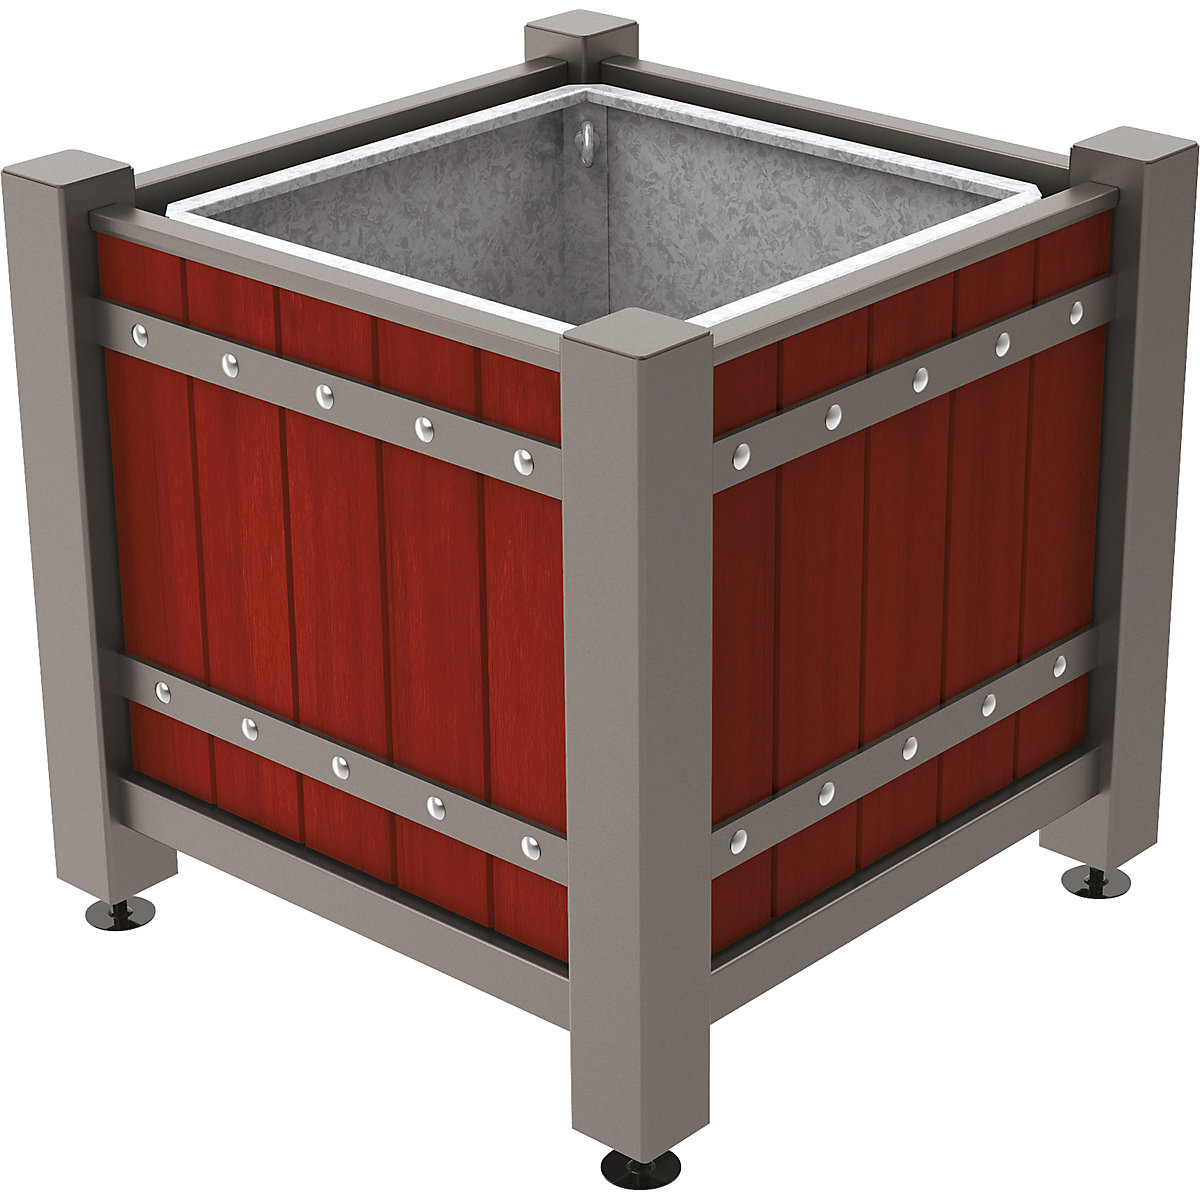 Plantencontainer SARLAT – PROCITY, h x b x d = 855 x 880 x 880 mm, kleur mahonie, grijs-2